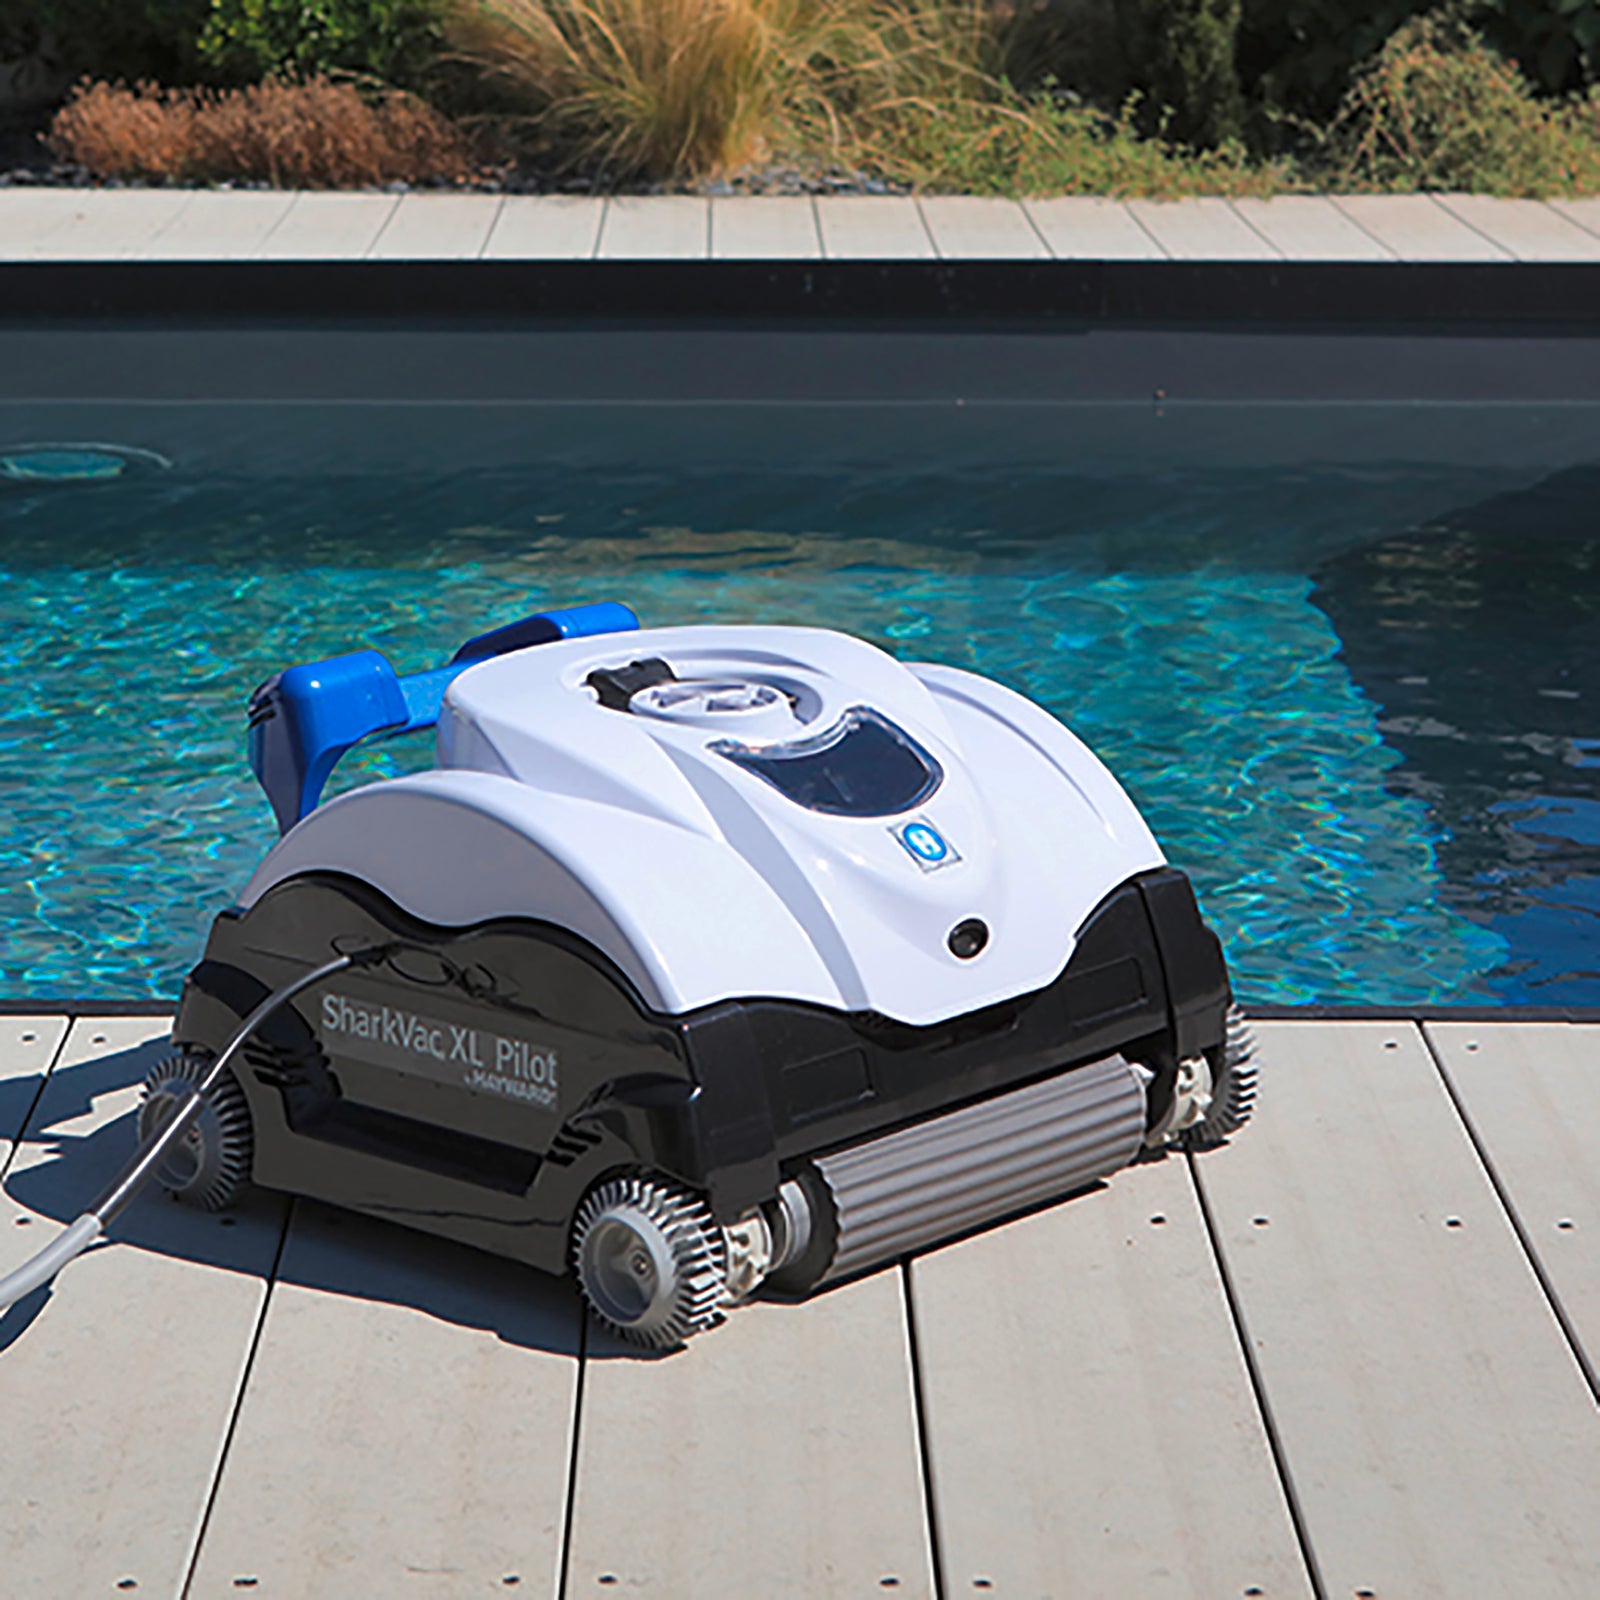 SHARK PILOT fundos aspirador elétrico Hayward aspirador de piscina robótico robotlimpa fundos